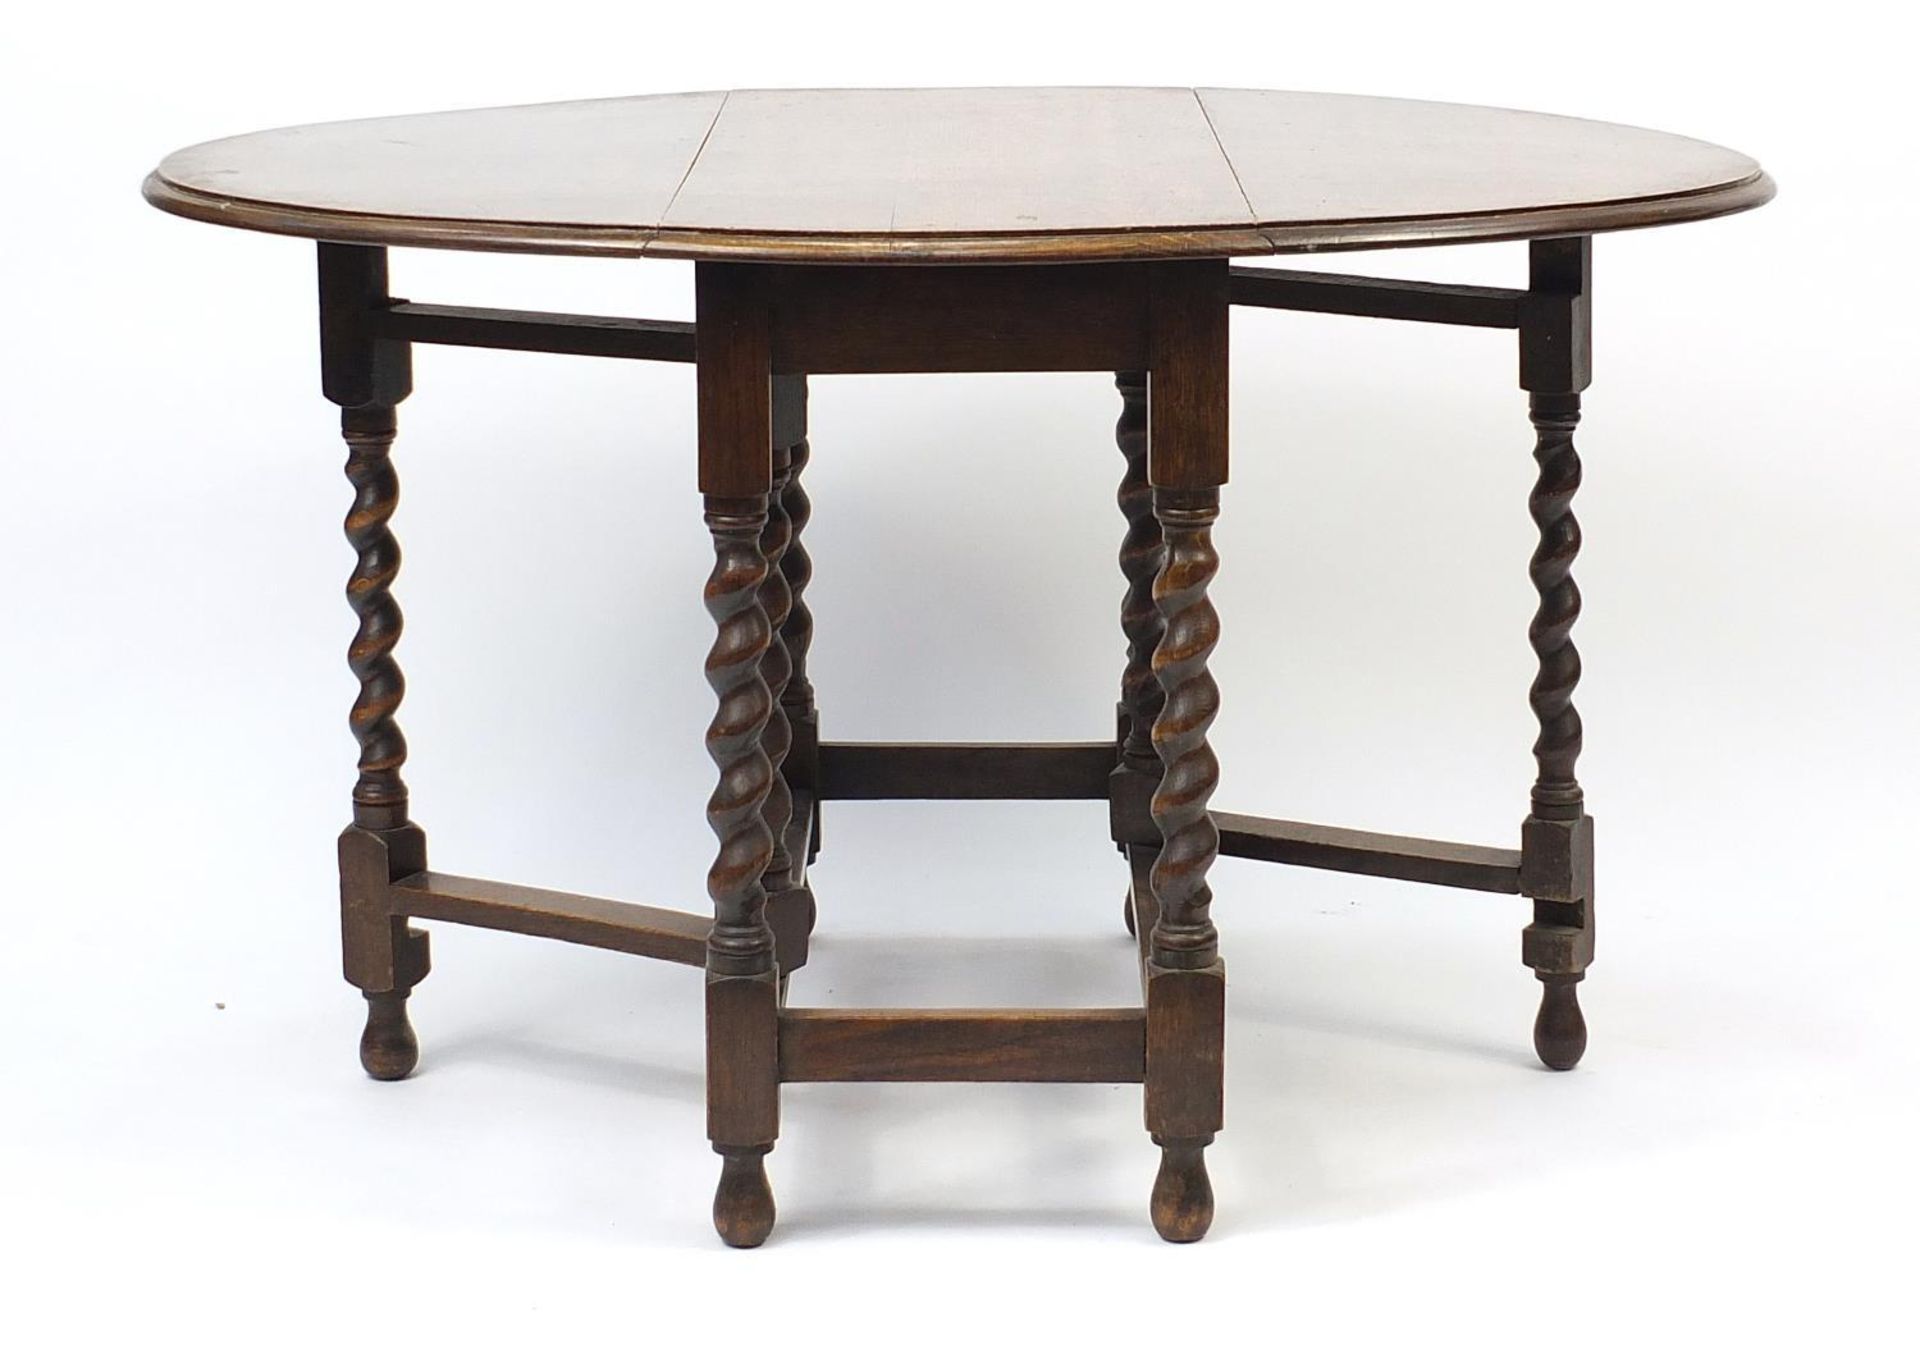 Oval oak gate leg table with barley twist legs, 73cm H x x 92cm W x 42cm D when closed : - Image 2 of 4